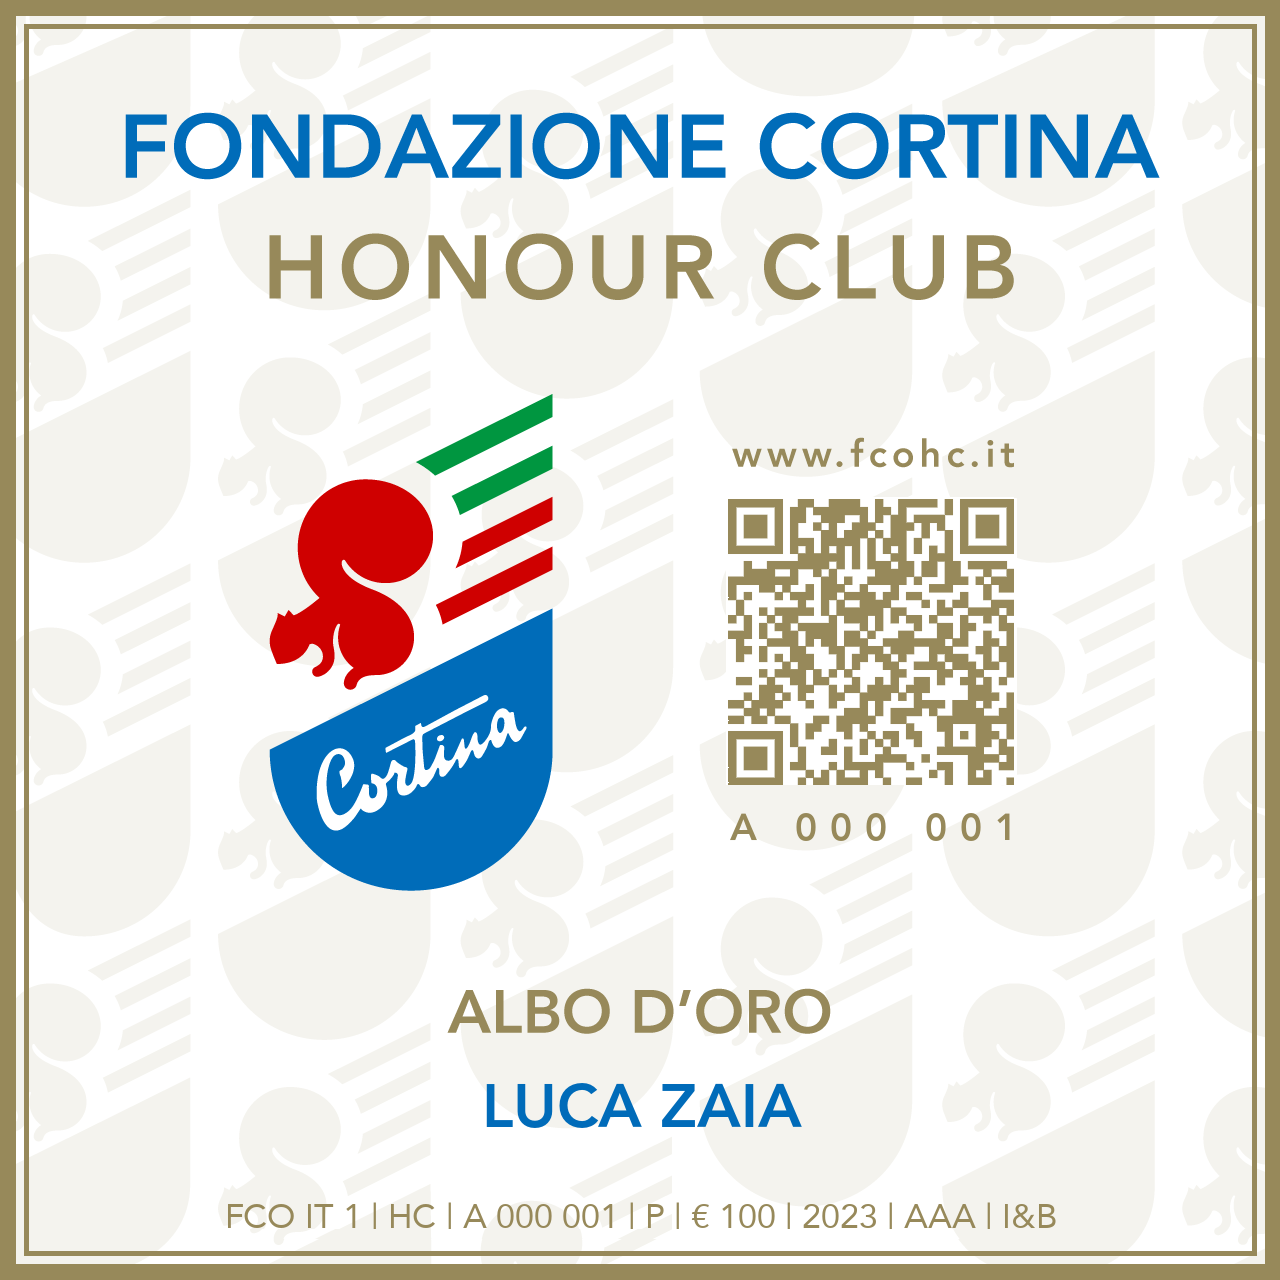 Fondazione Cortina Honour Club - Token Id A 000 001 - LUCA ZAIA